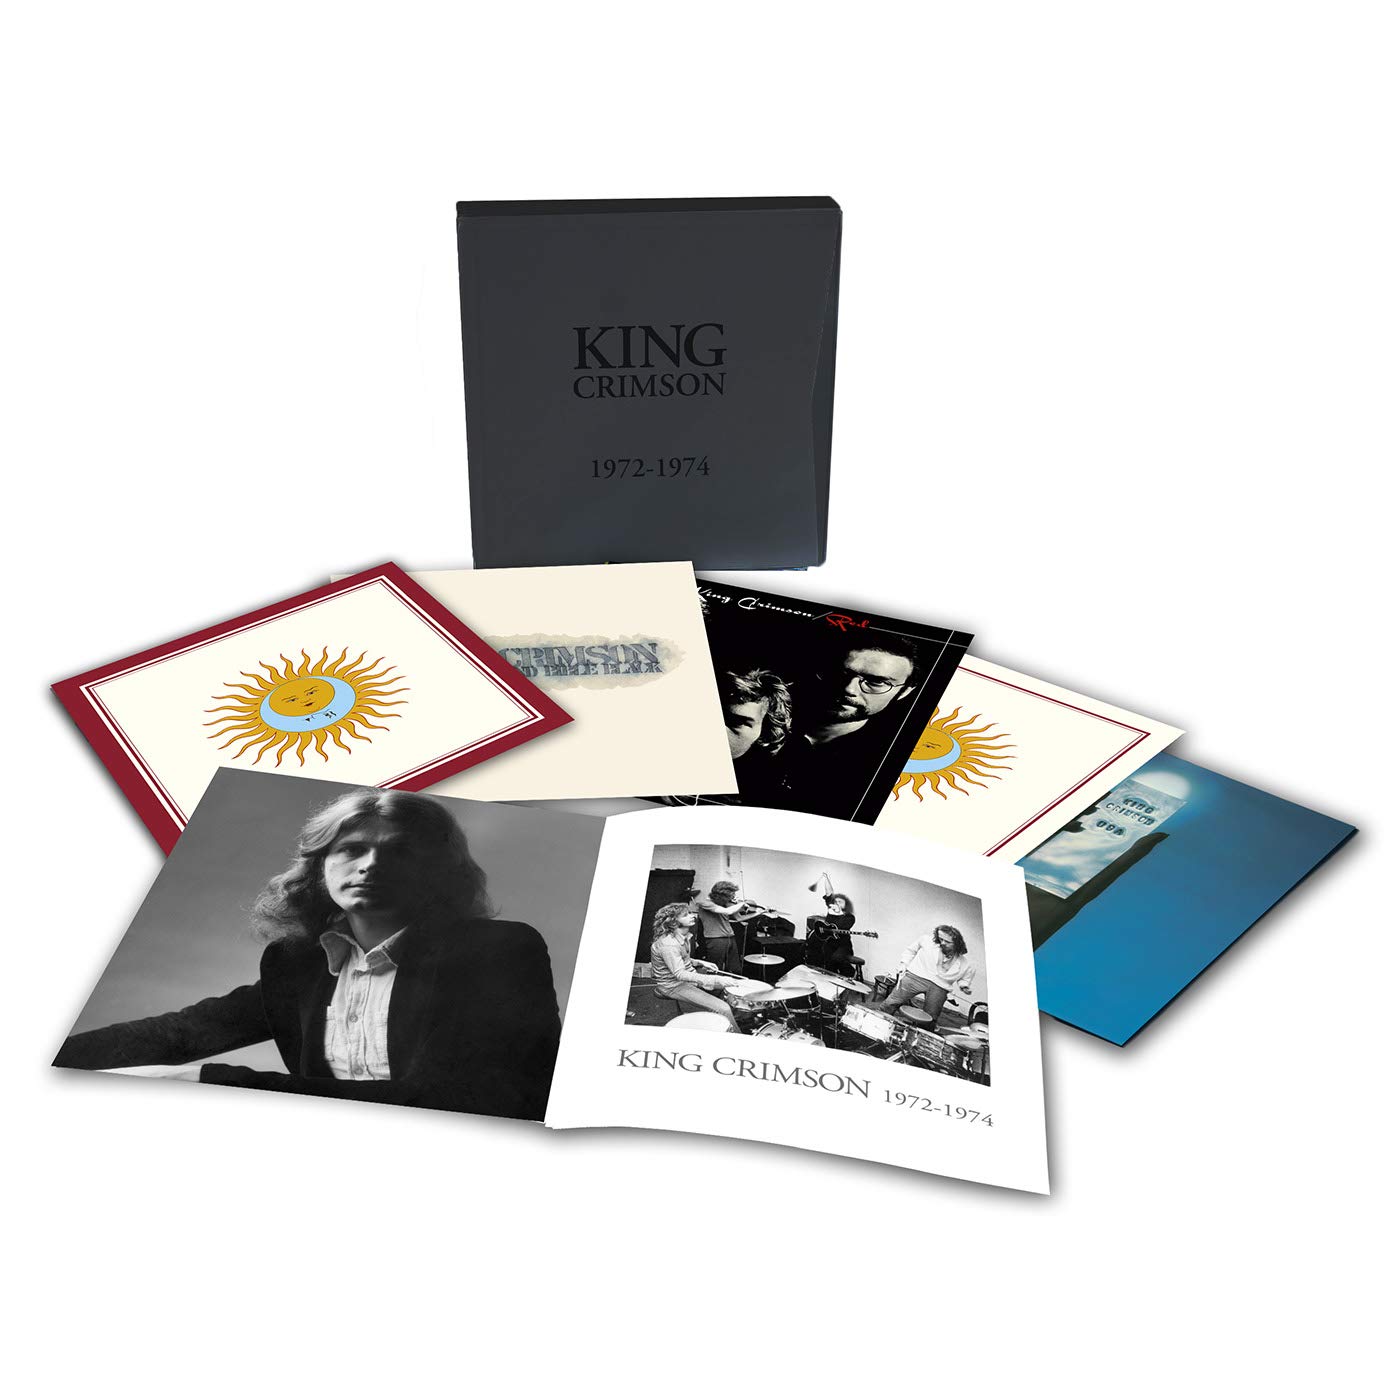 King Crimson - 1972 / - LP Box Set – The 'In'